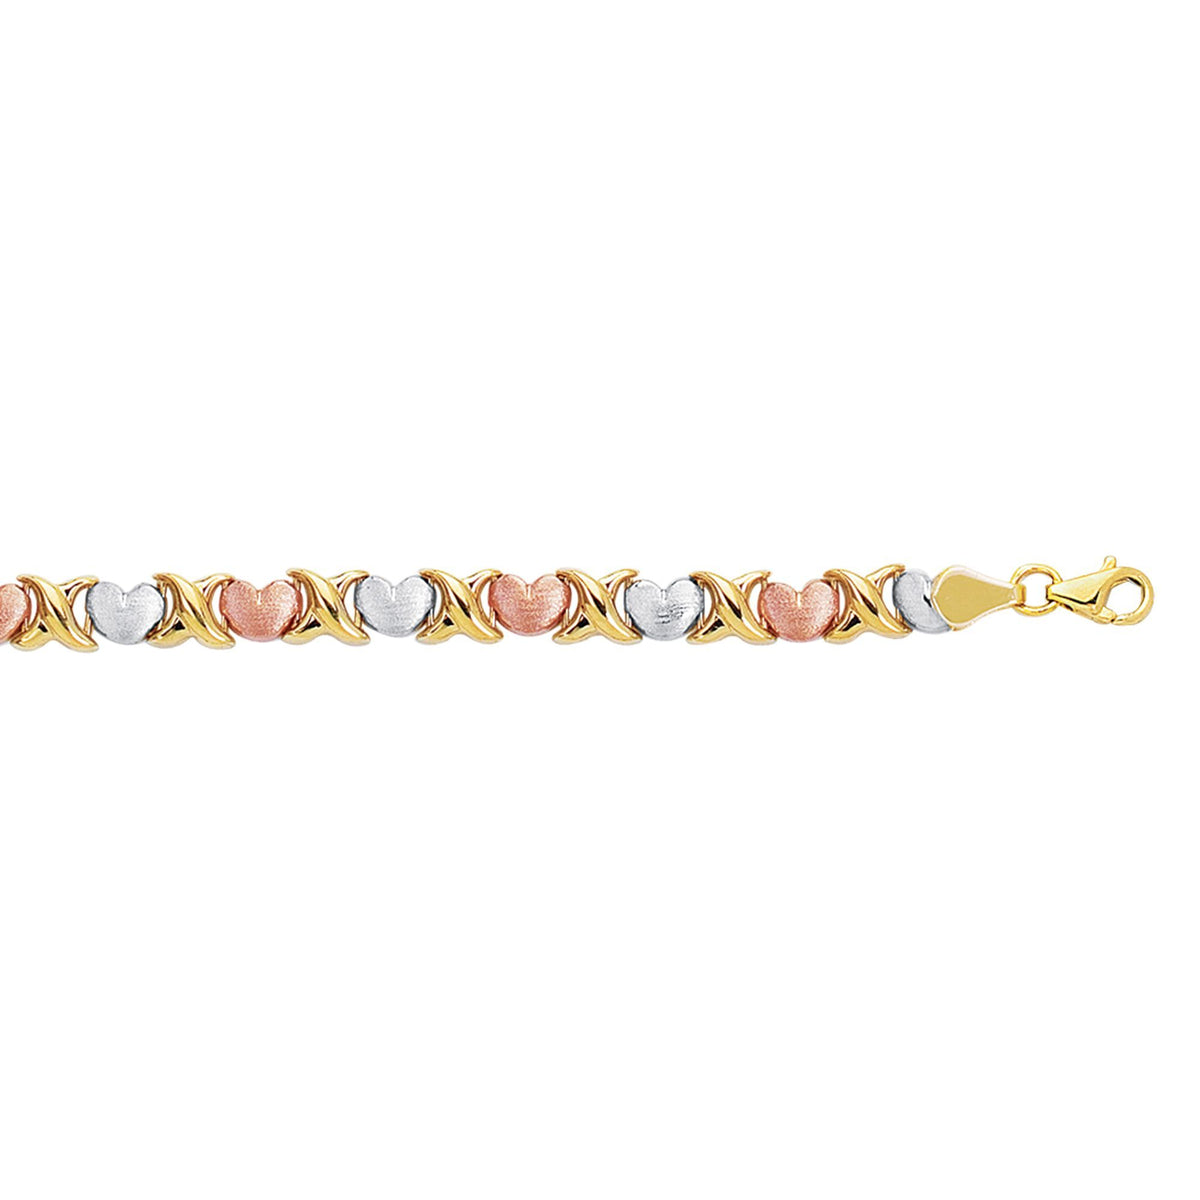 14k Yellow White And Rose Gold Heart Links Bracelet, 7.25" fine designer jewelry for men and women